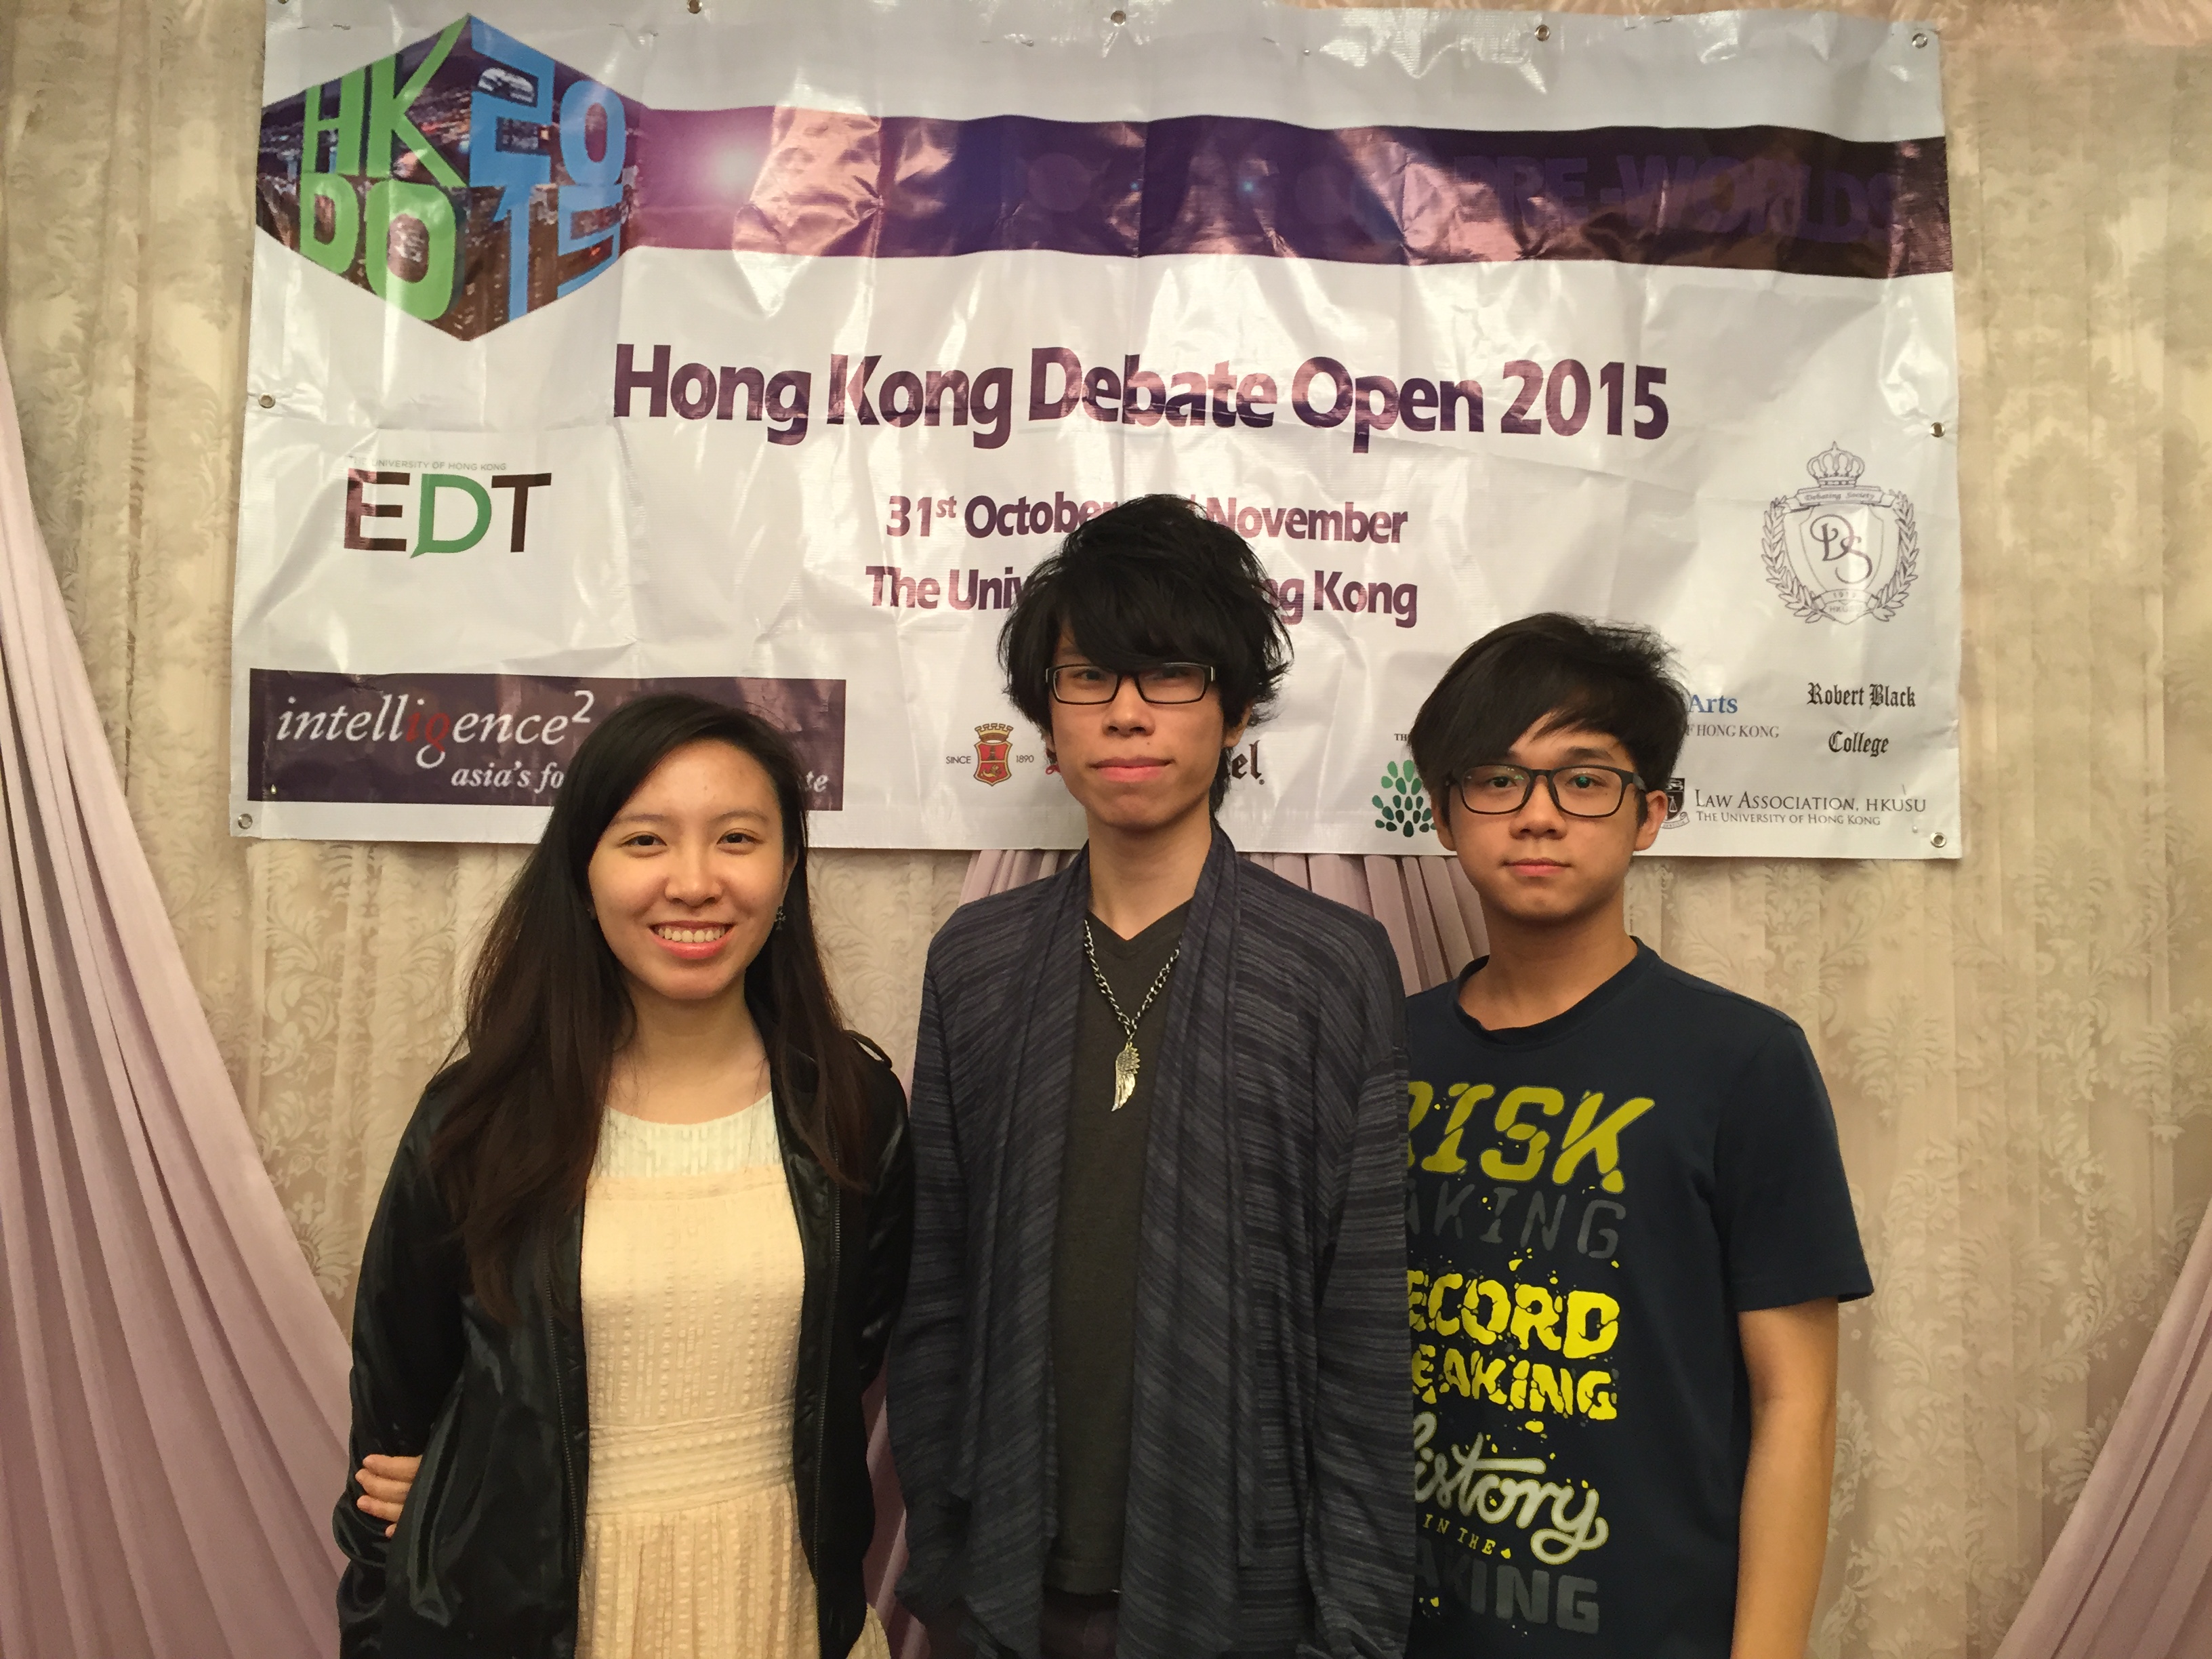 CIE Debaters at tournament banquet: (from left) SUN Tiana, SOO Chun Kwan Animus, and CHING Tsz Lok Steven